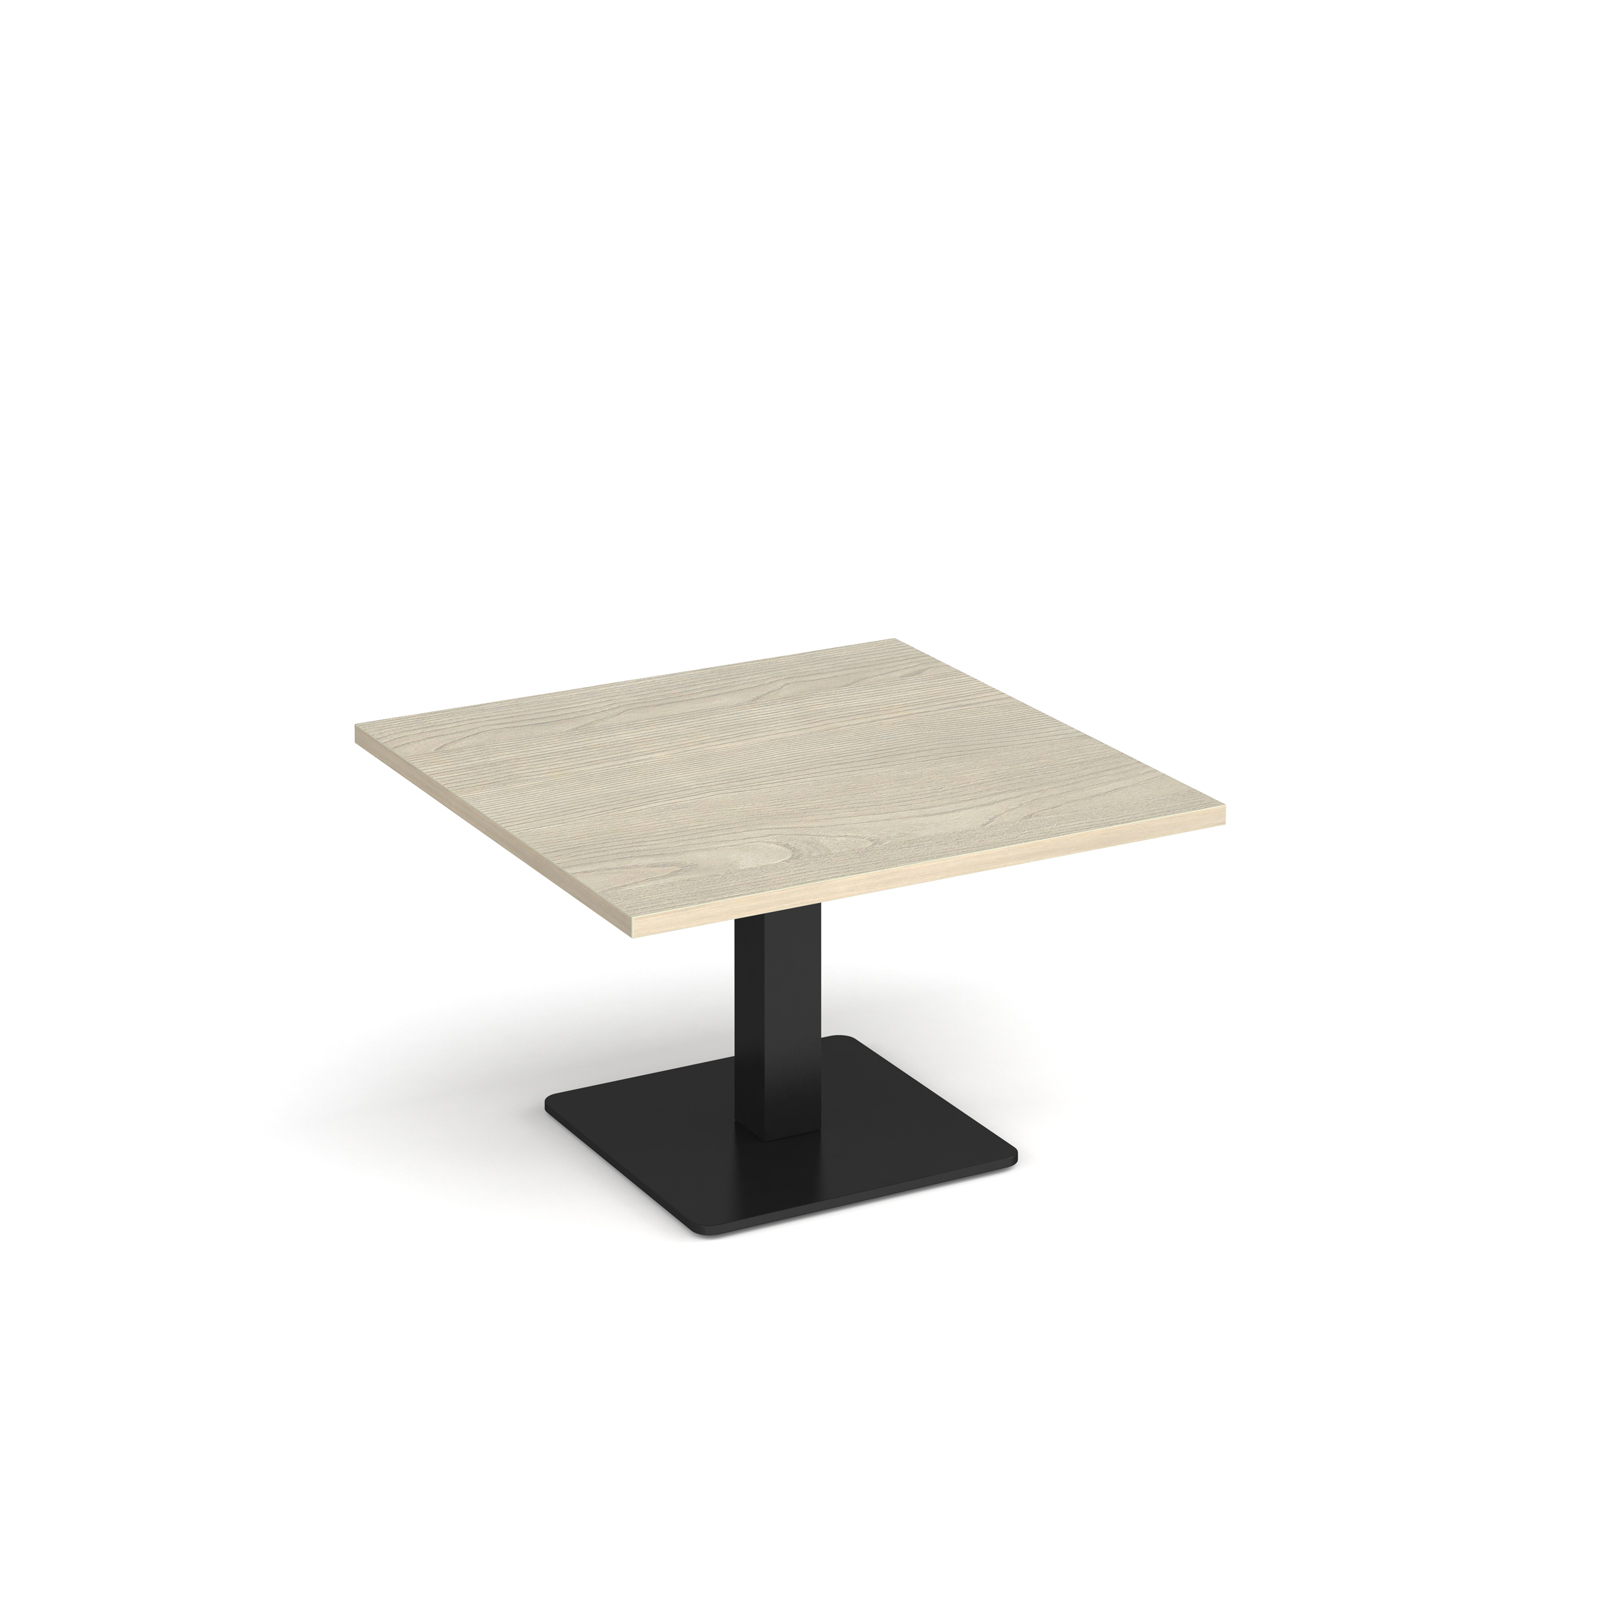 Brescia square coffee table with flat square base